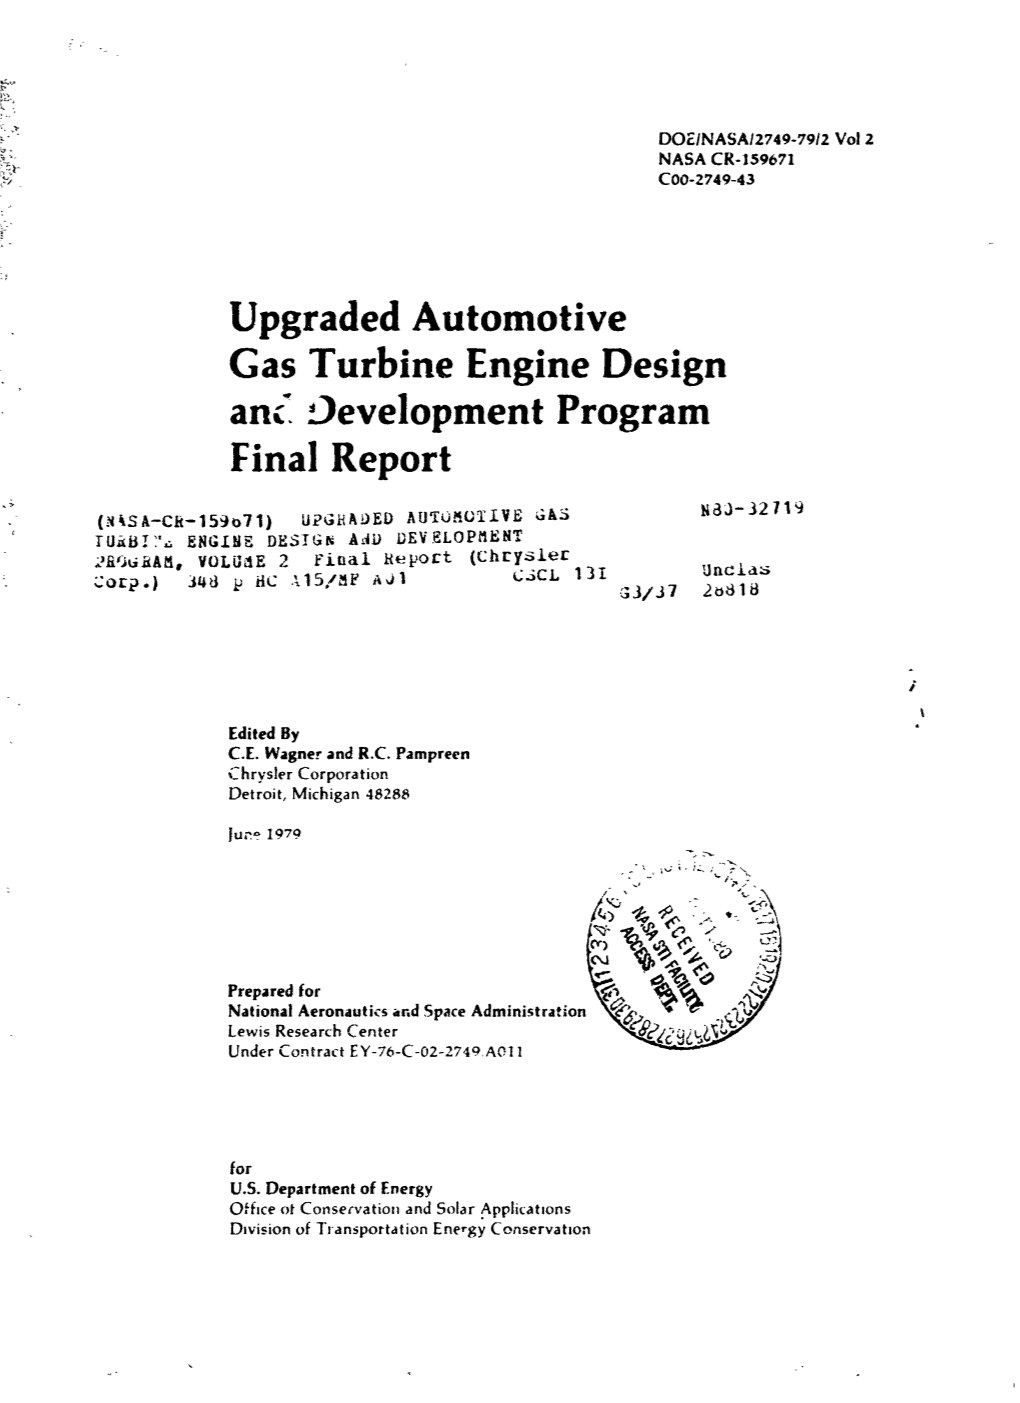 Upgraded Automotive Gas Turbine Engine Design An&lt; 9Evelopment